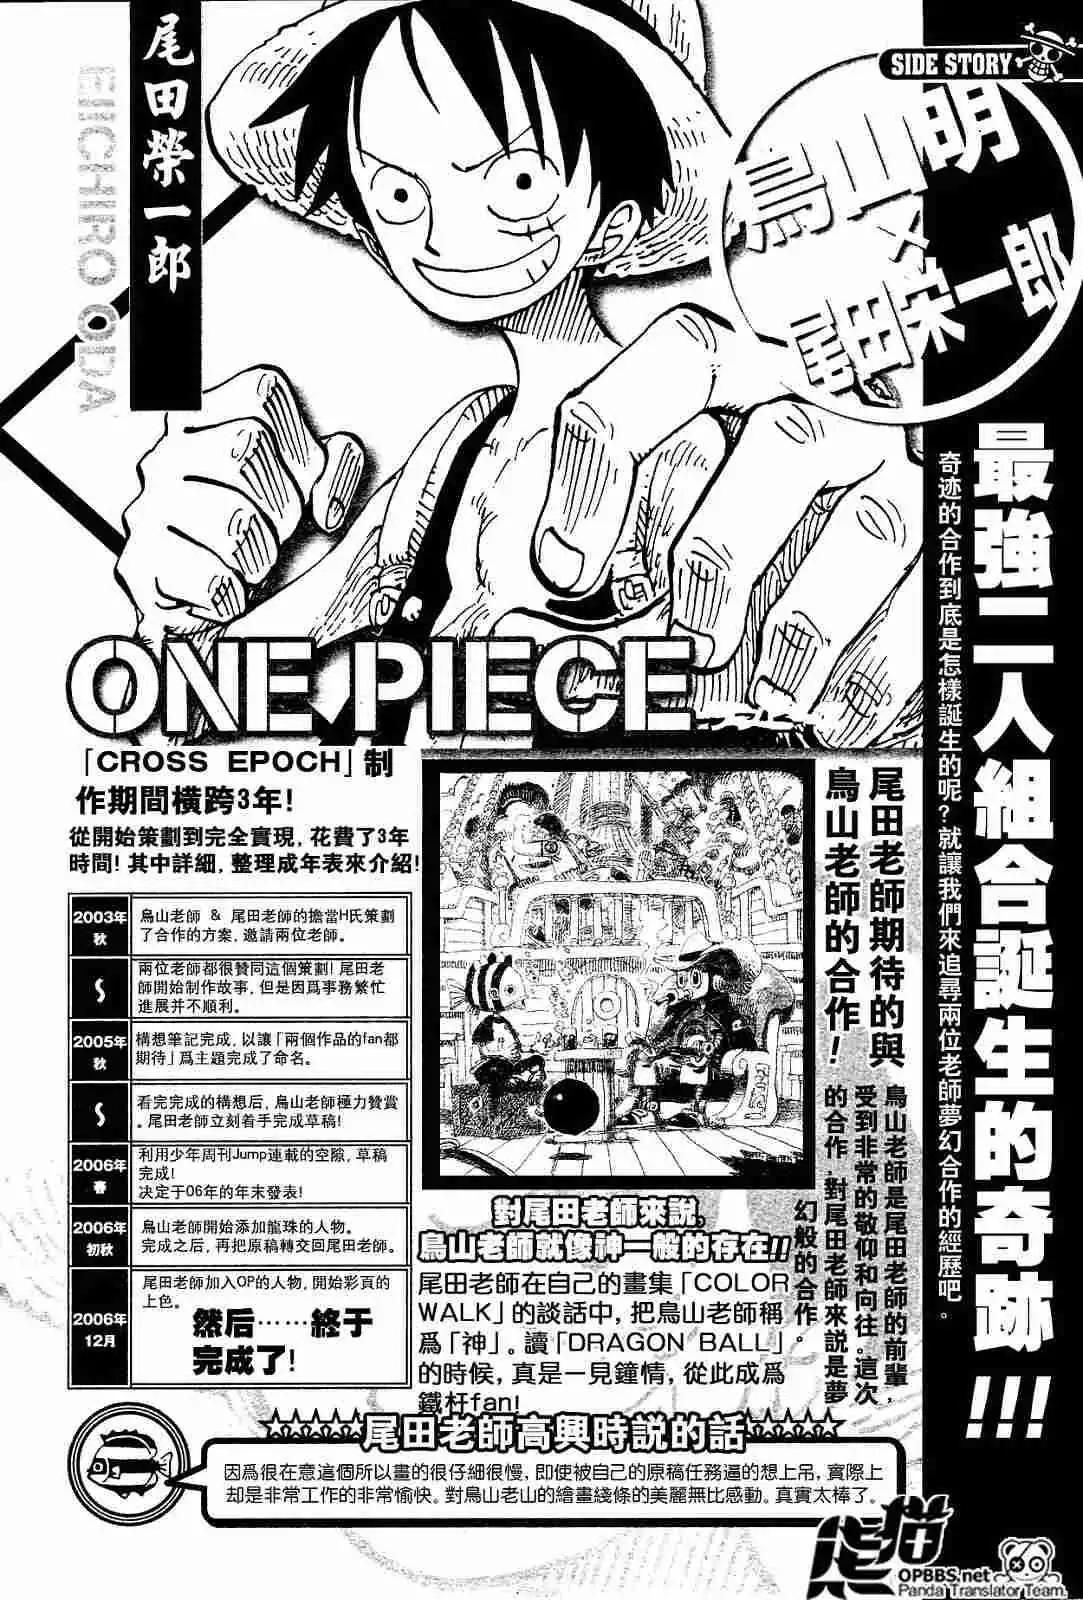 ONE PIECE航海王 - 海賊王10週年增刊完全版(1/2) - 6